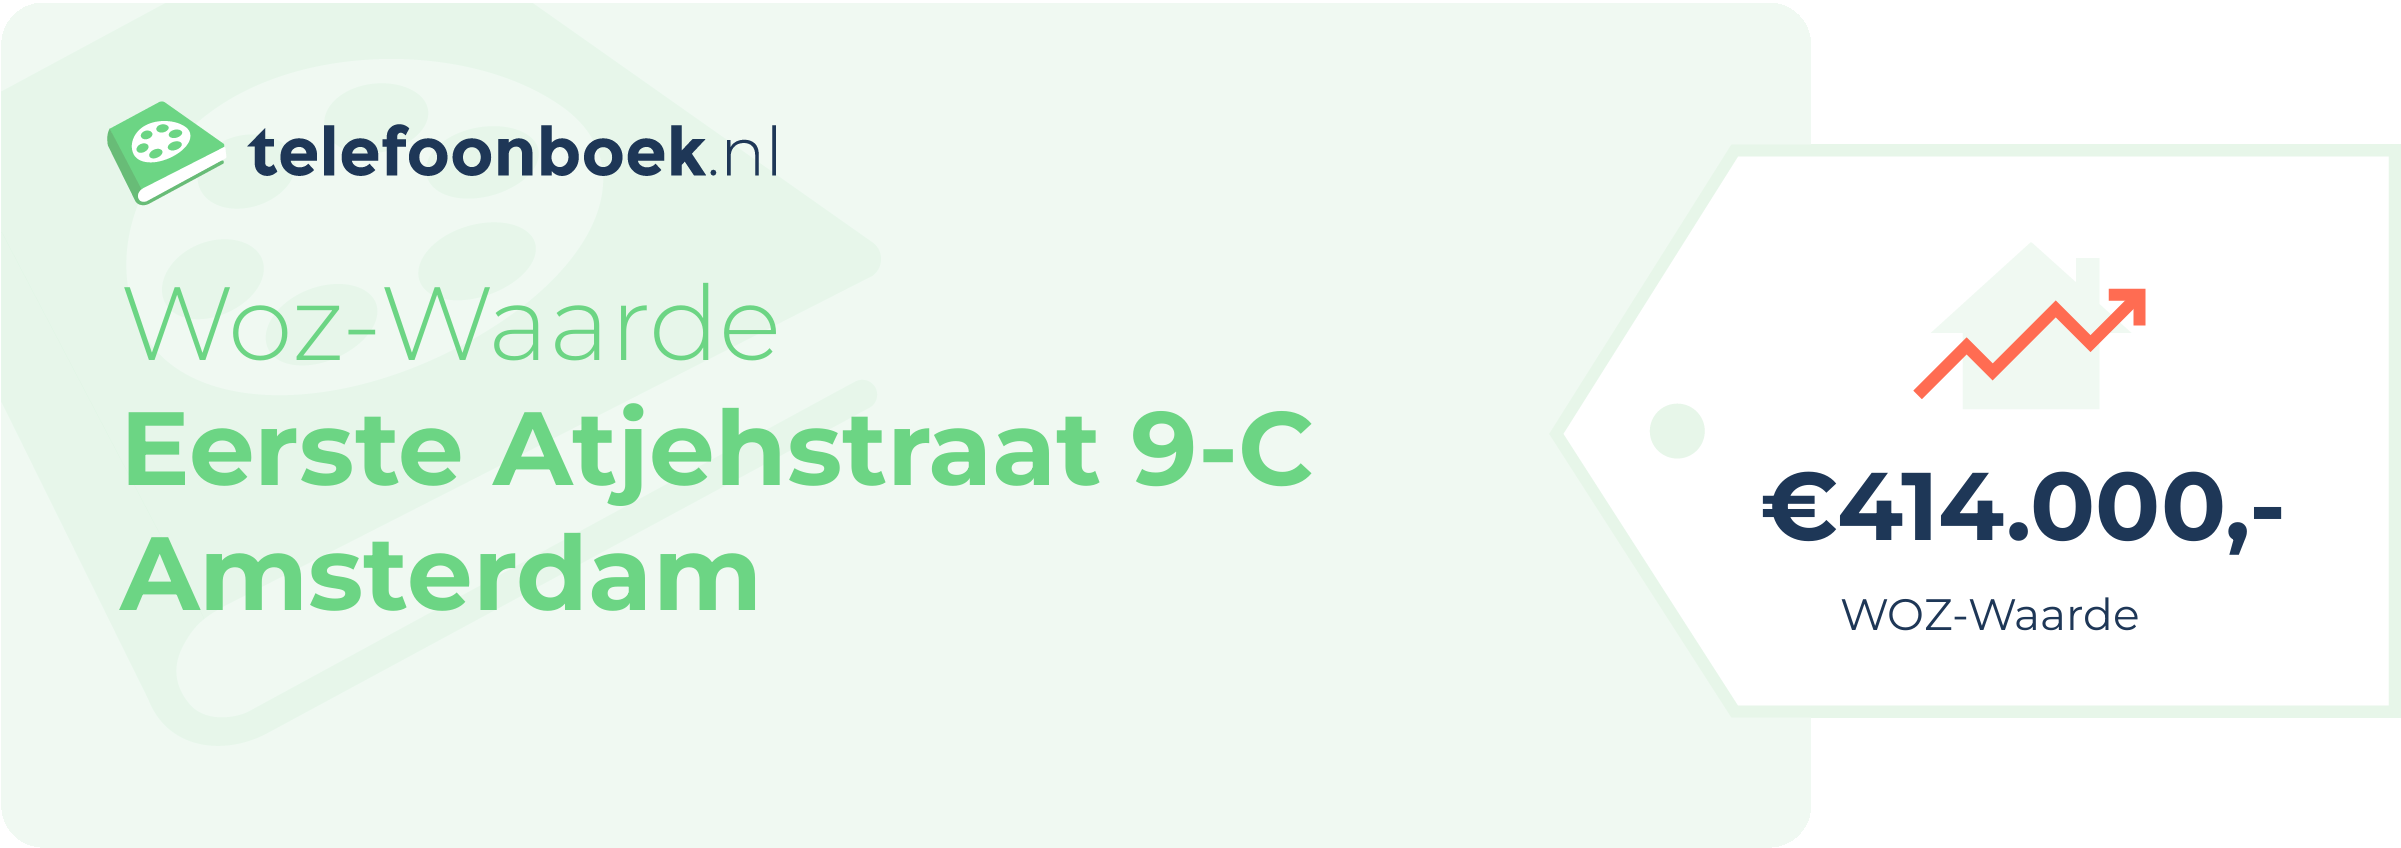 WOZ-waarde Eerste Atjehstraat 9-C Amsterdam